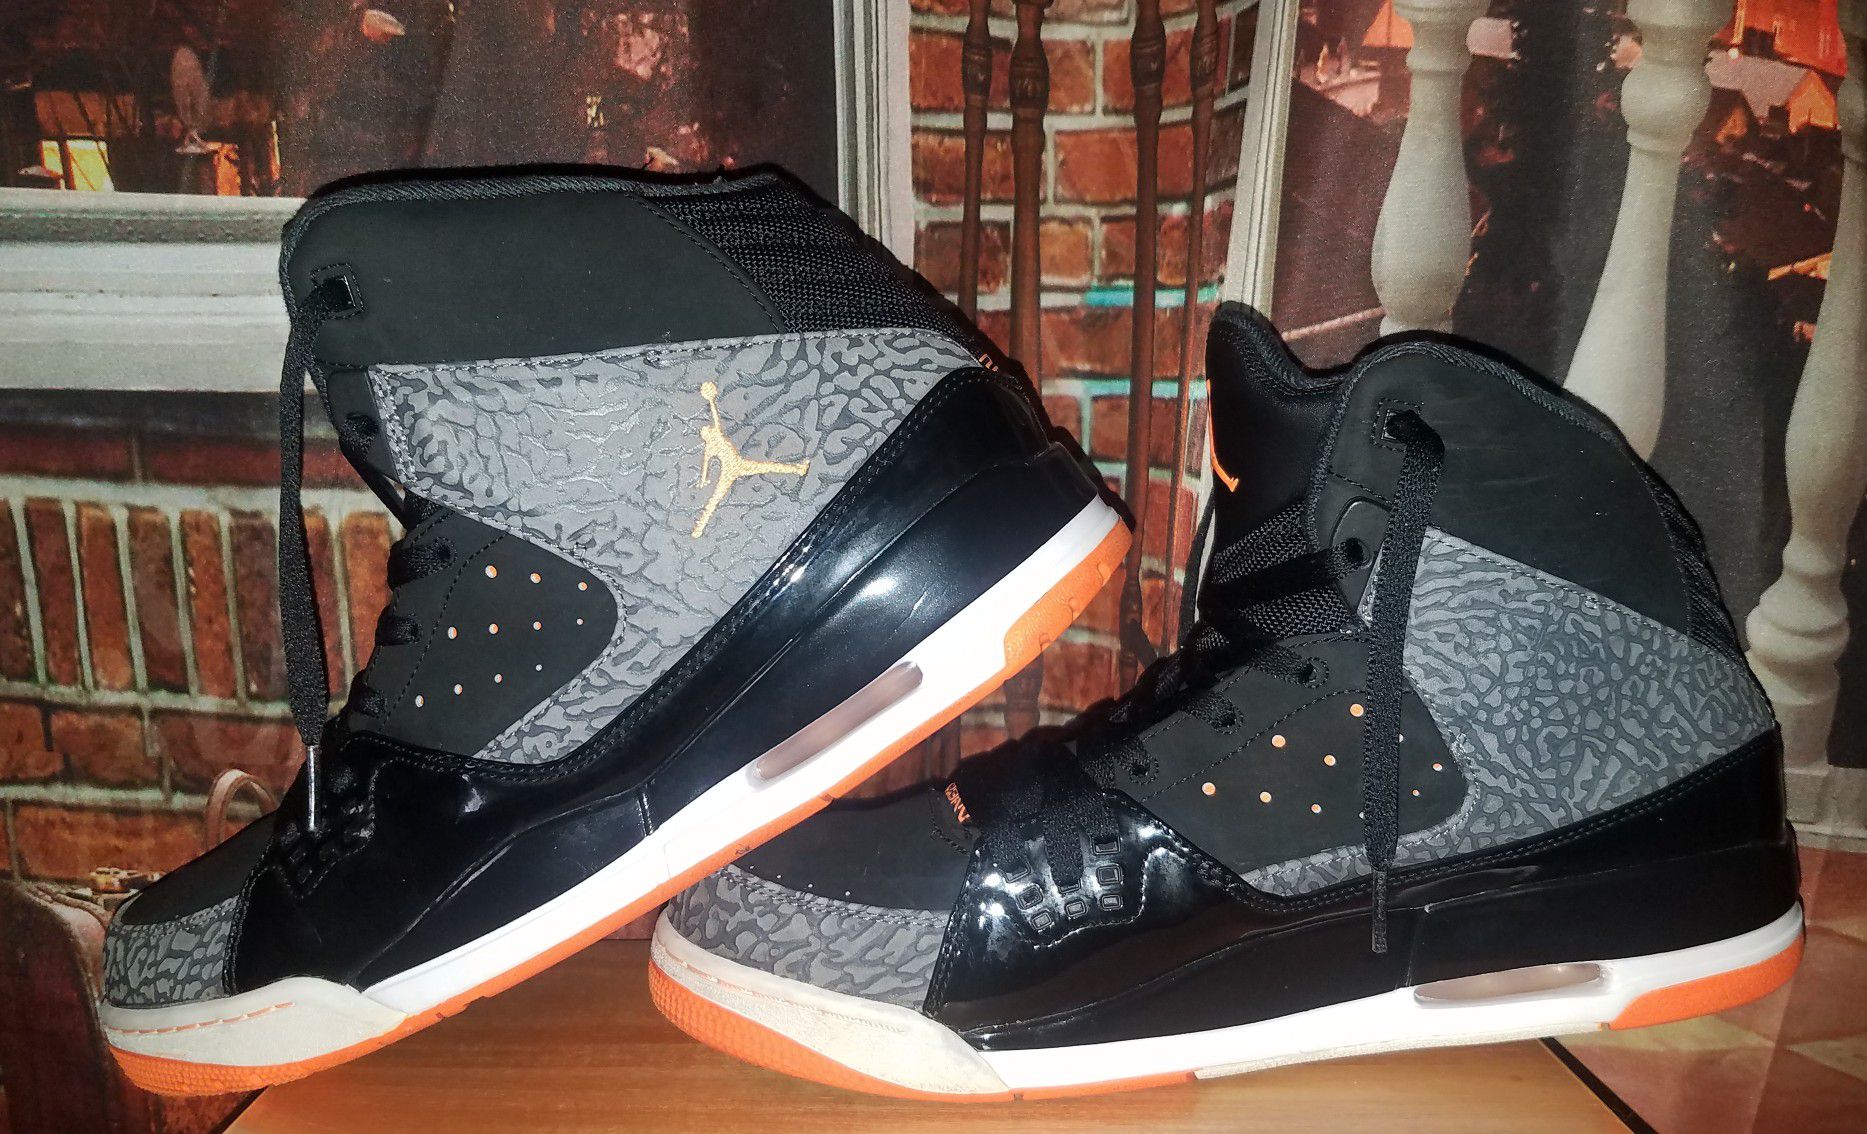 Nike Air Jordan SC-1 Mens Basketball Sneakers Size 13 Black Orange Shoes Bengals Halloween